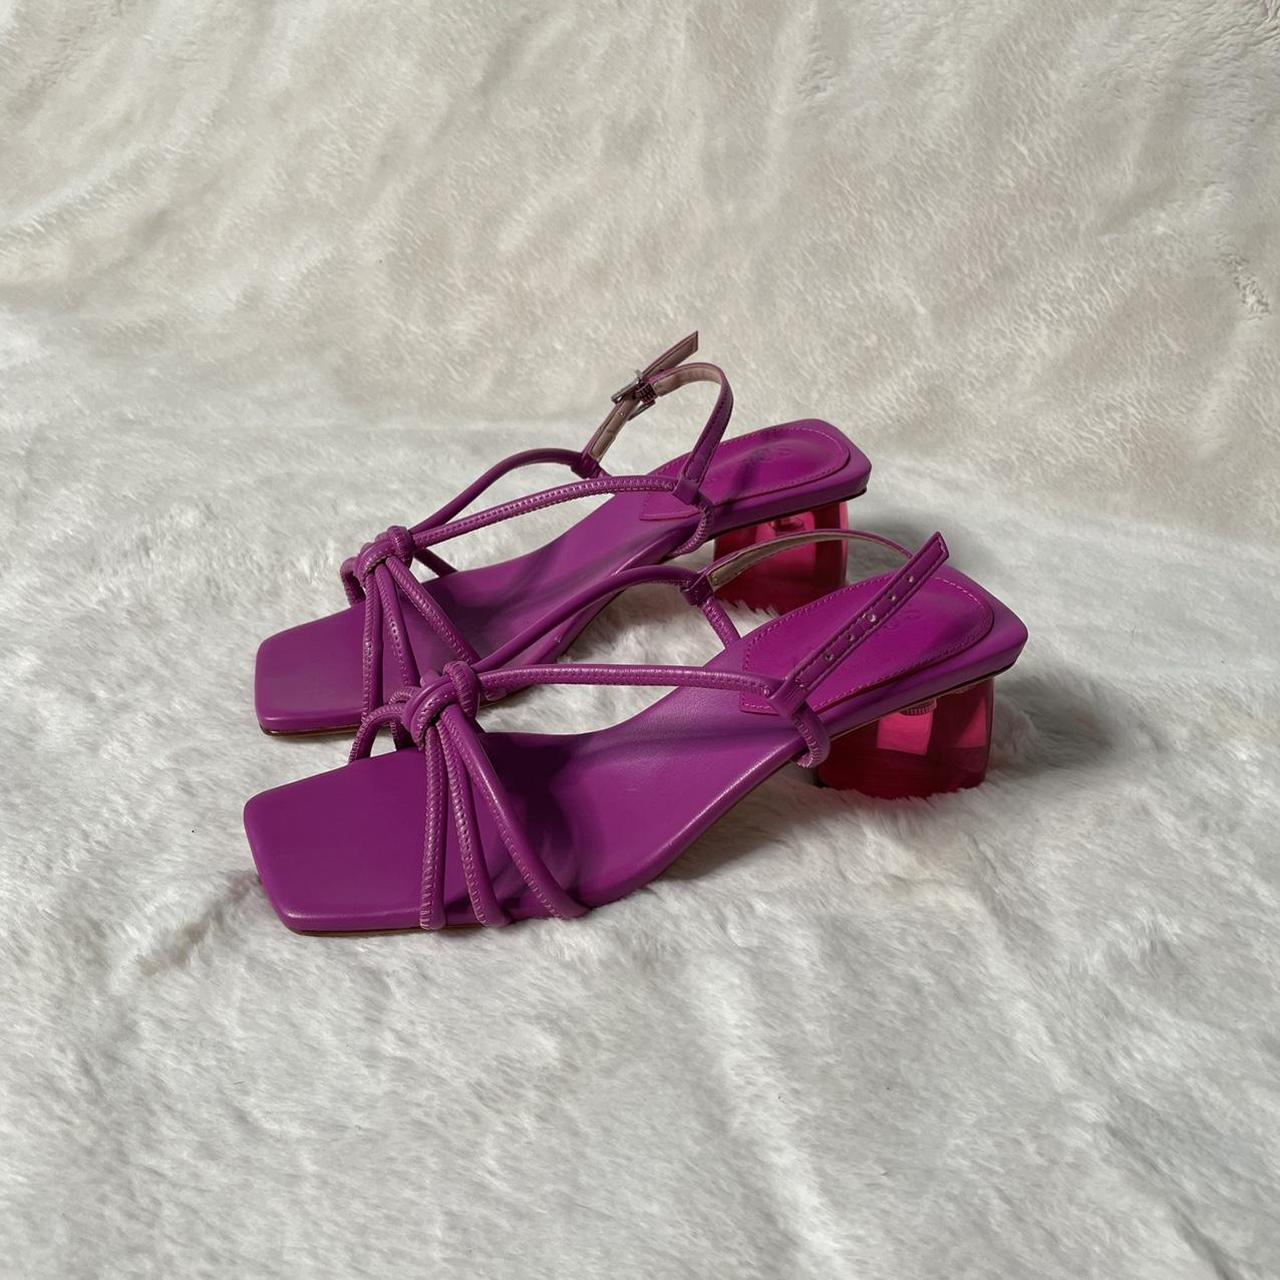 Schutz Women's Purple Sandals